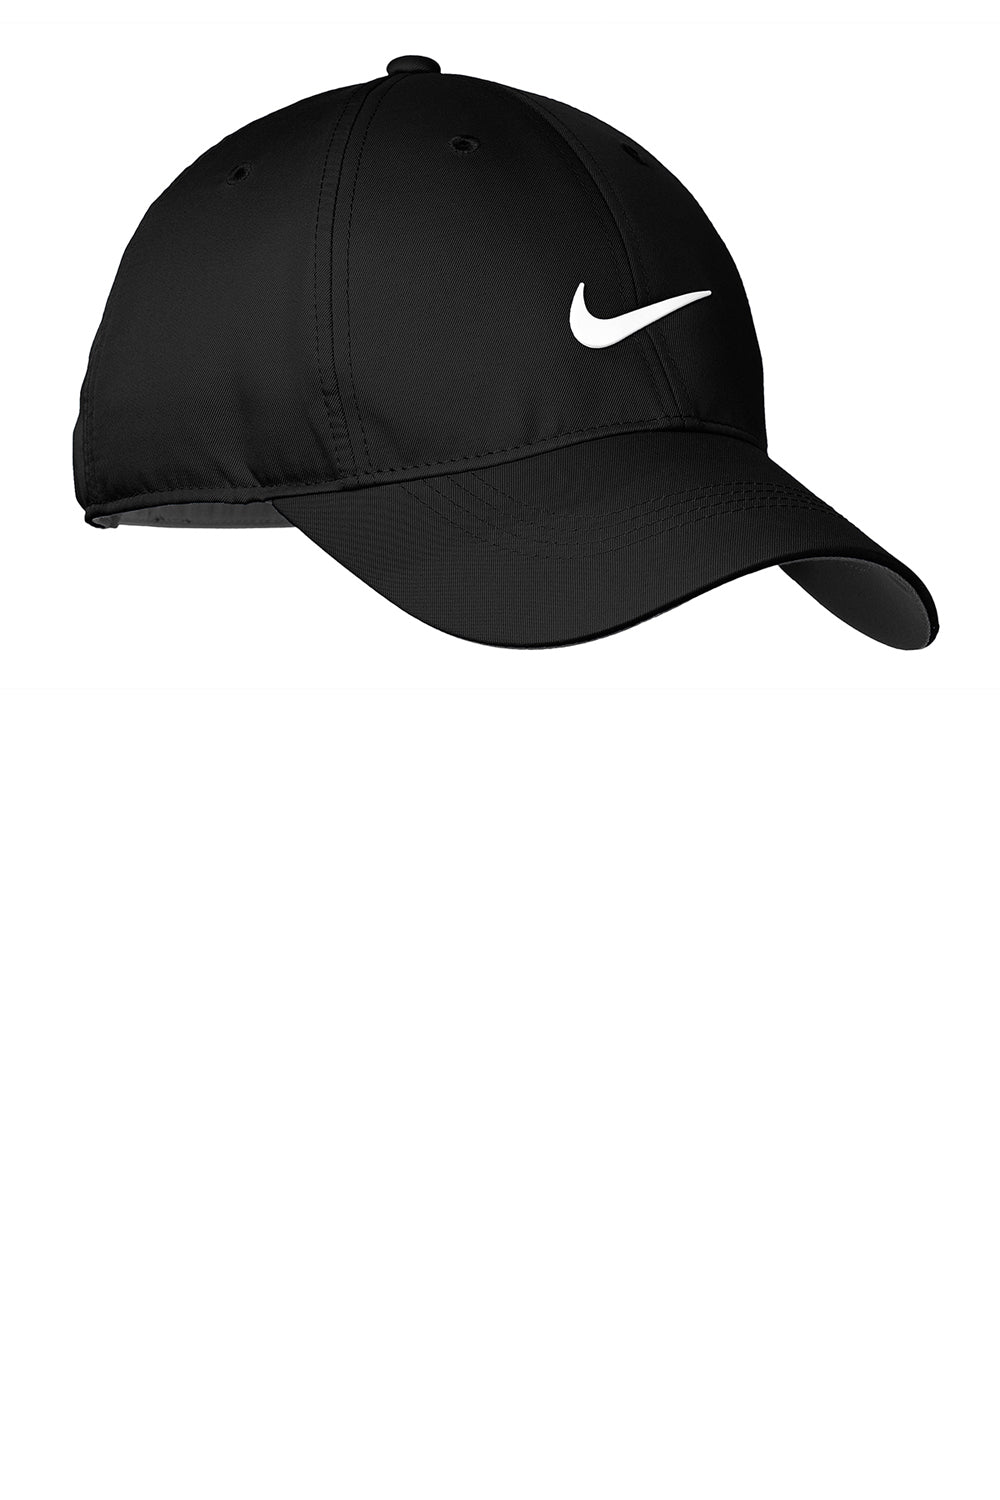 Nike 548533 Mens Dri-Fit Moisture Wicking Adjustable Hat Black Front